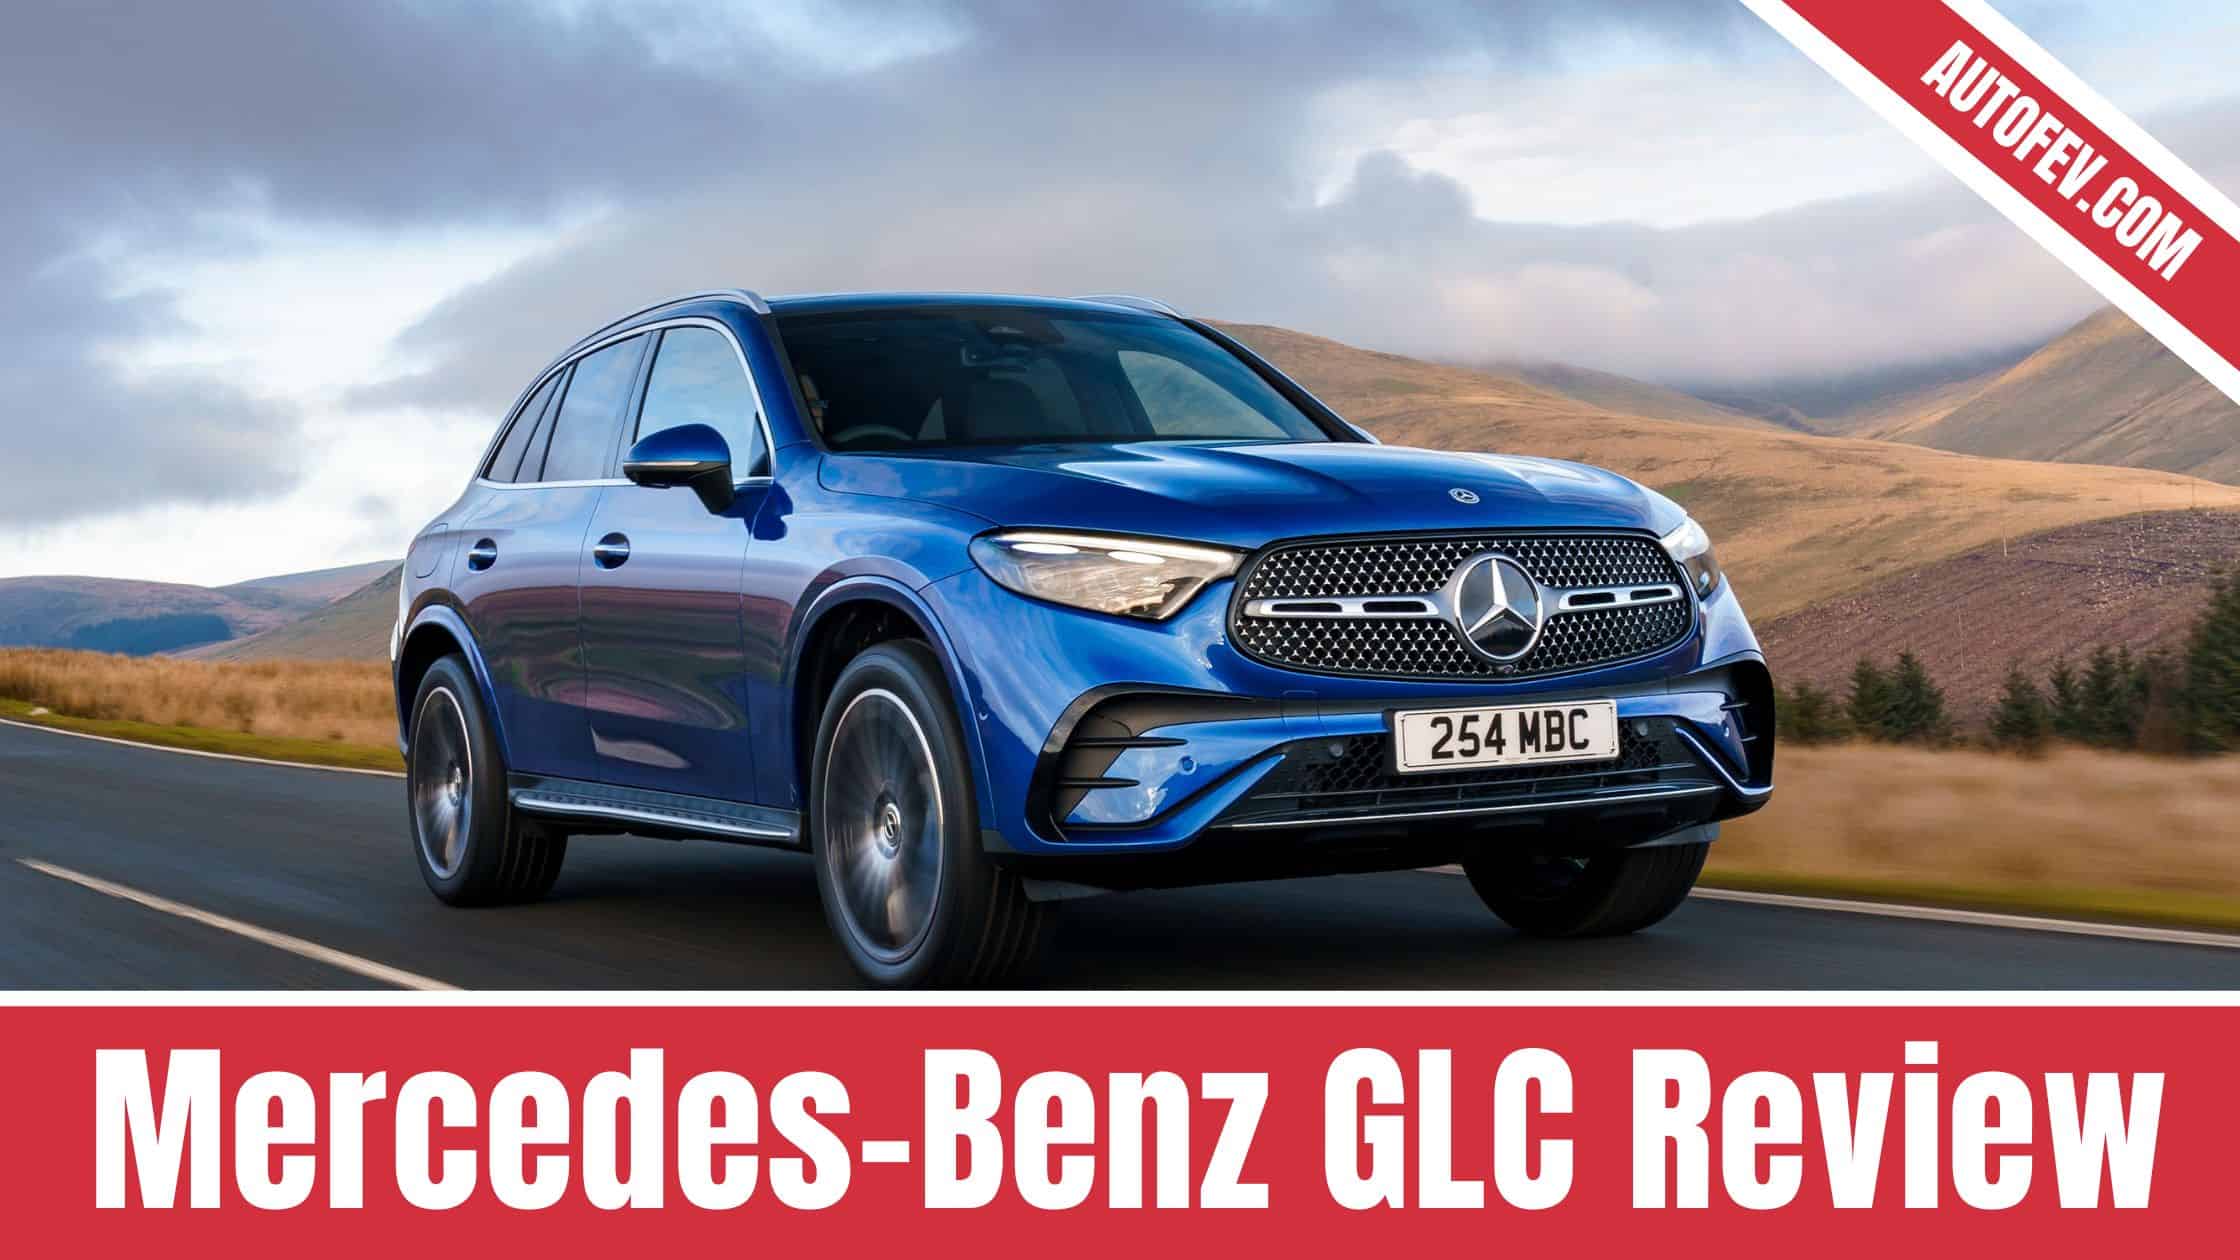 Mercedes-Benz GLC Review